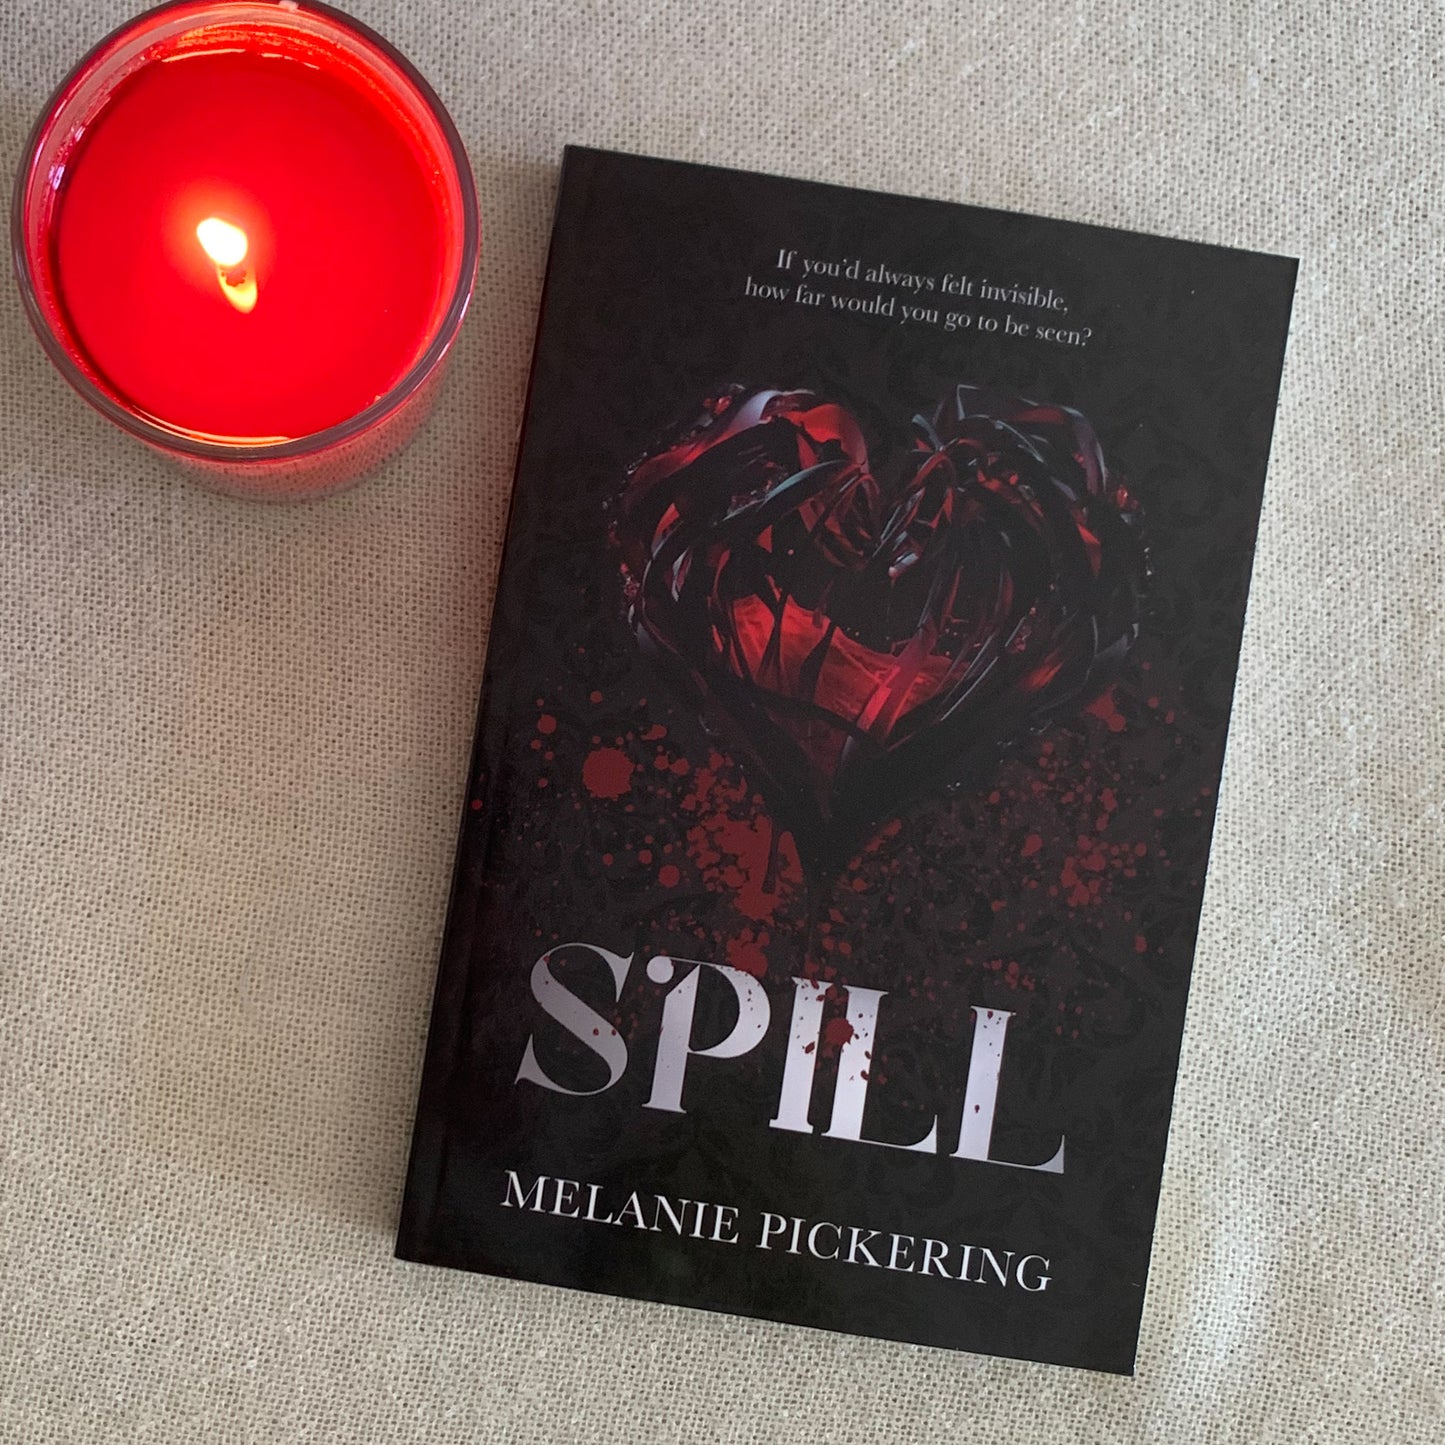 Spill by Melanie Pickering